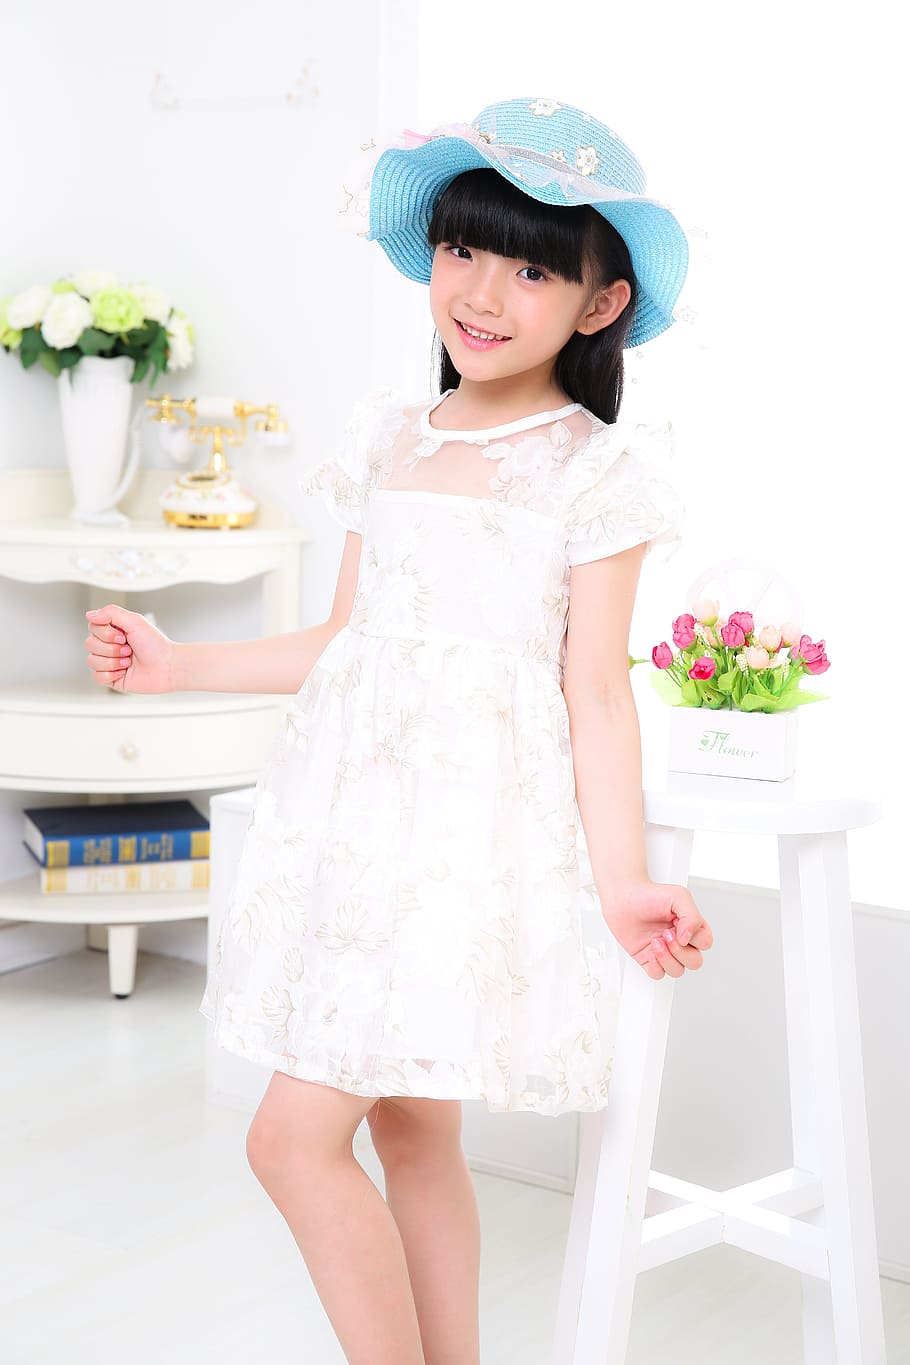 Child, Girls, Portrait, Photo, white dress, hat, bid, asia, cute, childhood